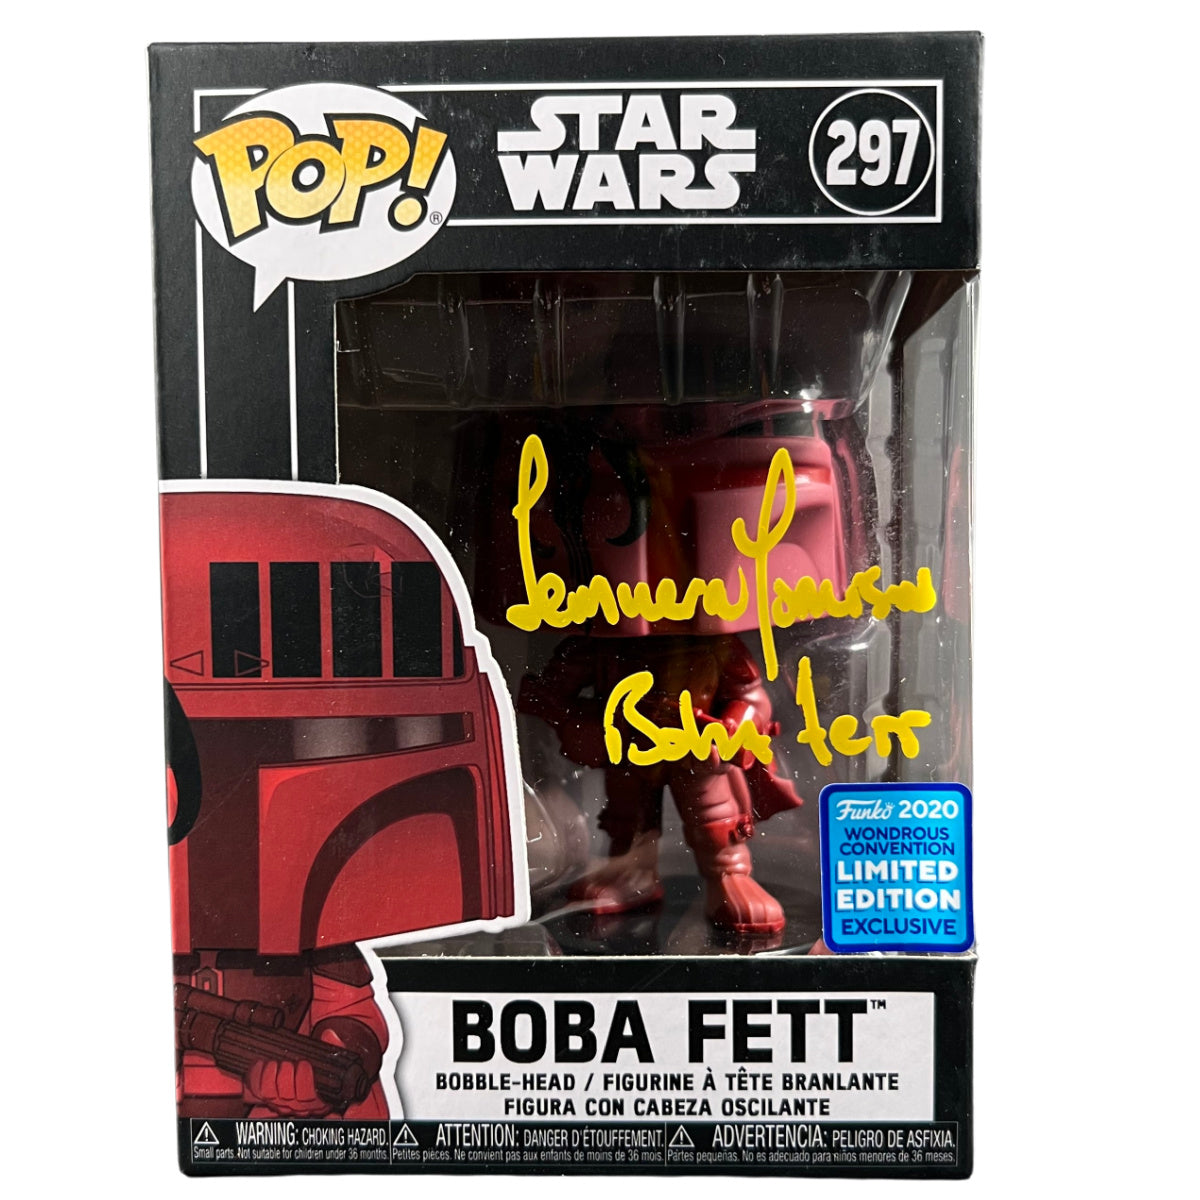 Temuera Morrison Signed Funko POP Star Wars Boba Fett Autographed JSA COA #297